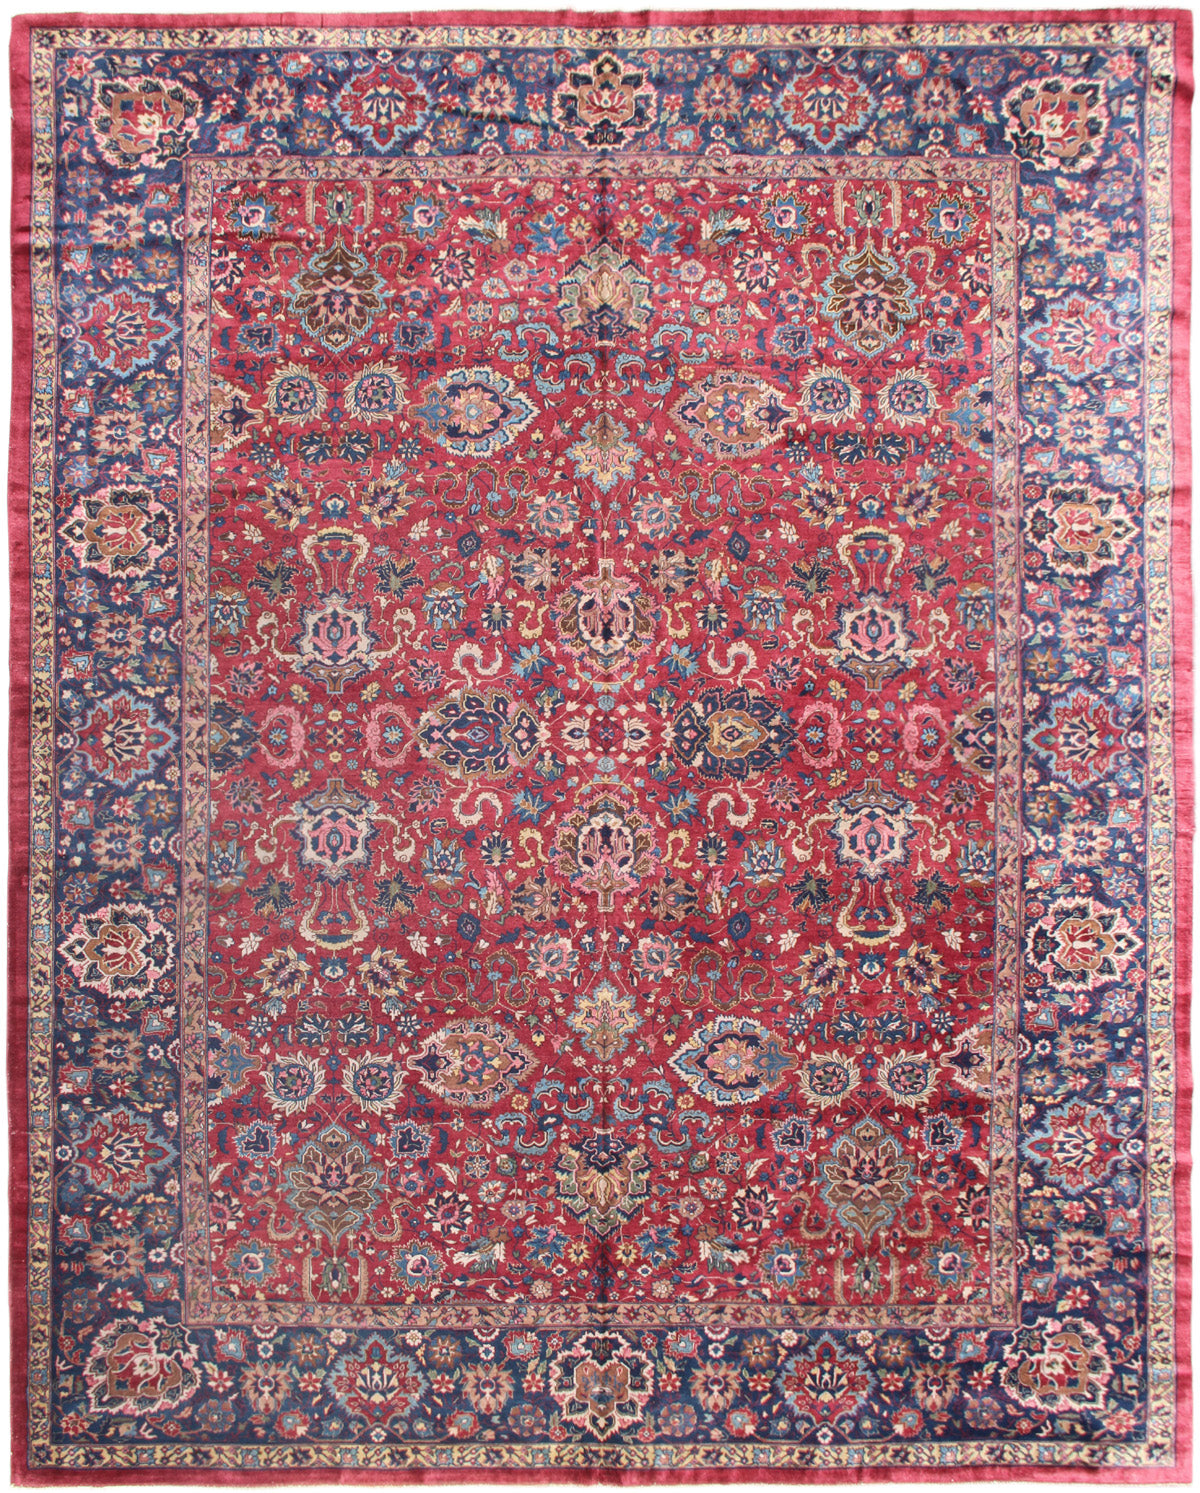 11'x15' Red Blue Classic Persian Kashan Rug